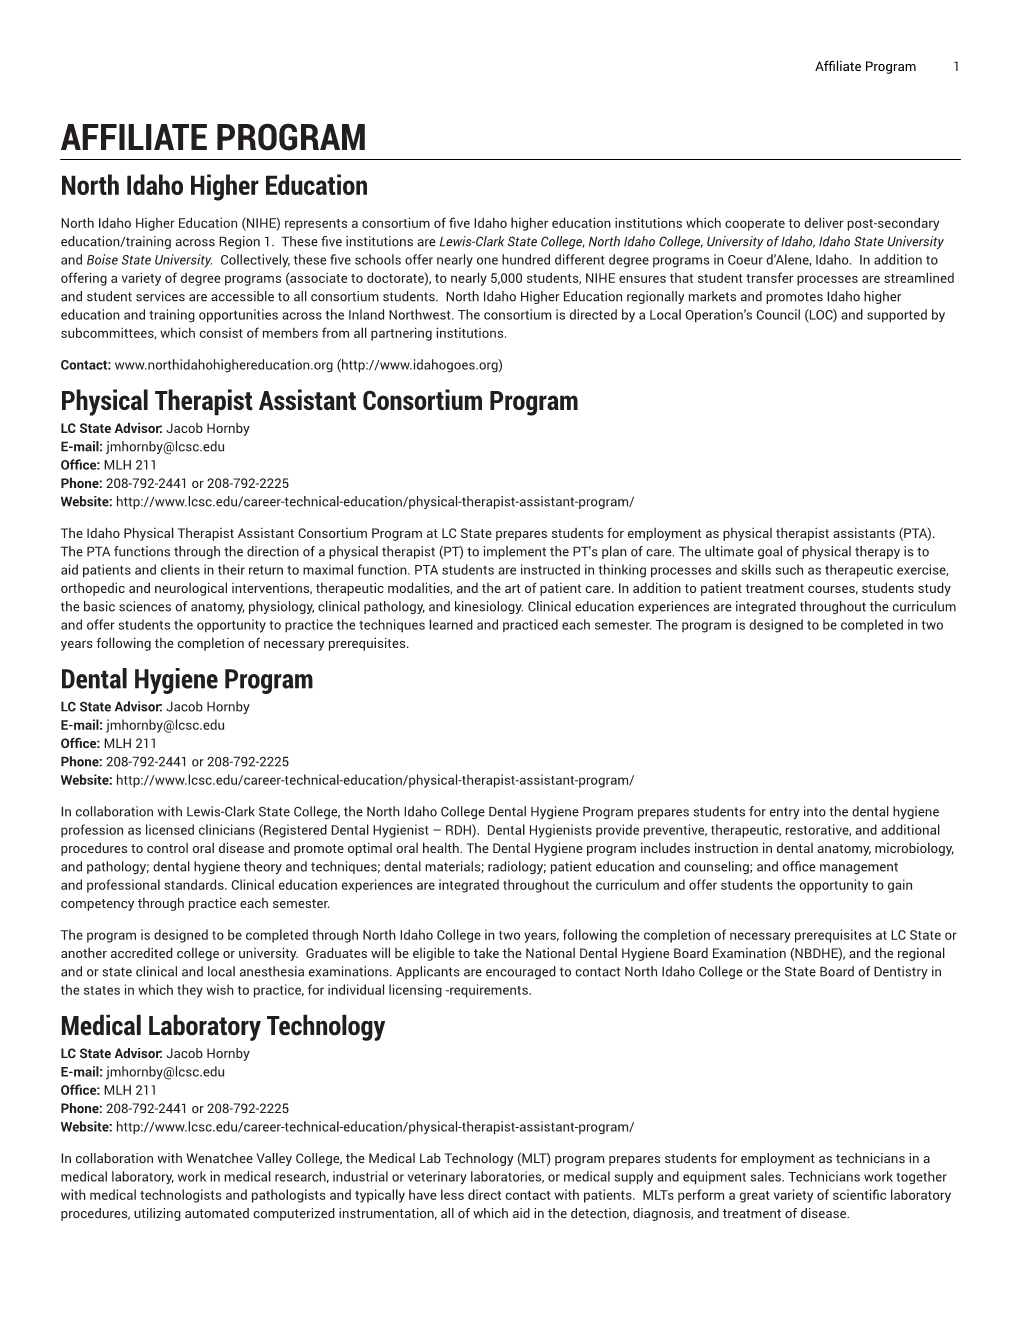 AFFILIATE PROGRAM North Idaho Higher Education